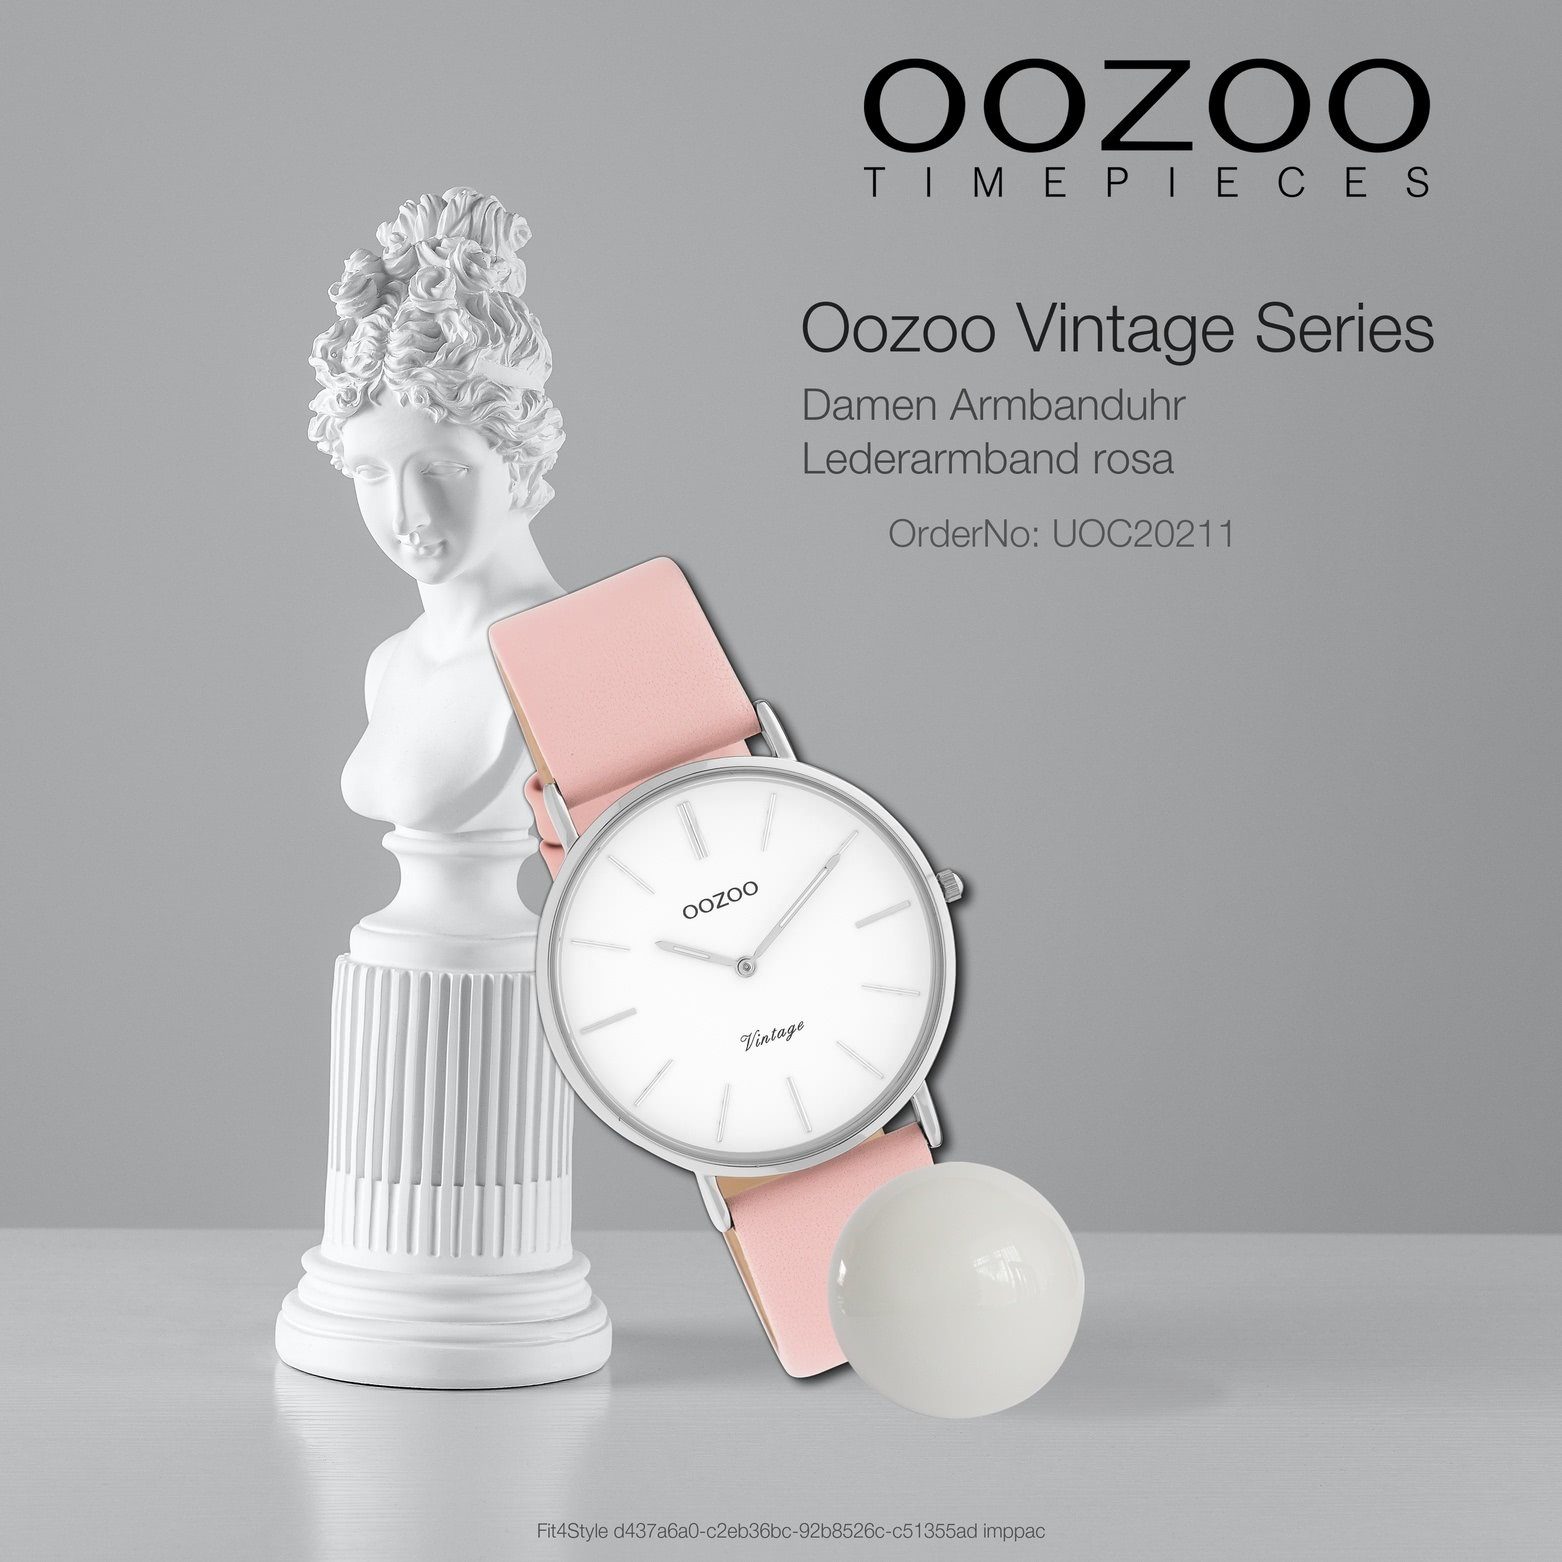 36mm) Fashion-Style rosa mittel Armbanduhr Lederarmband, rund, Quarzuhr OOZOO Damenuhr Analog, Oozoo Damen (ca.